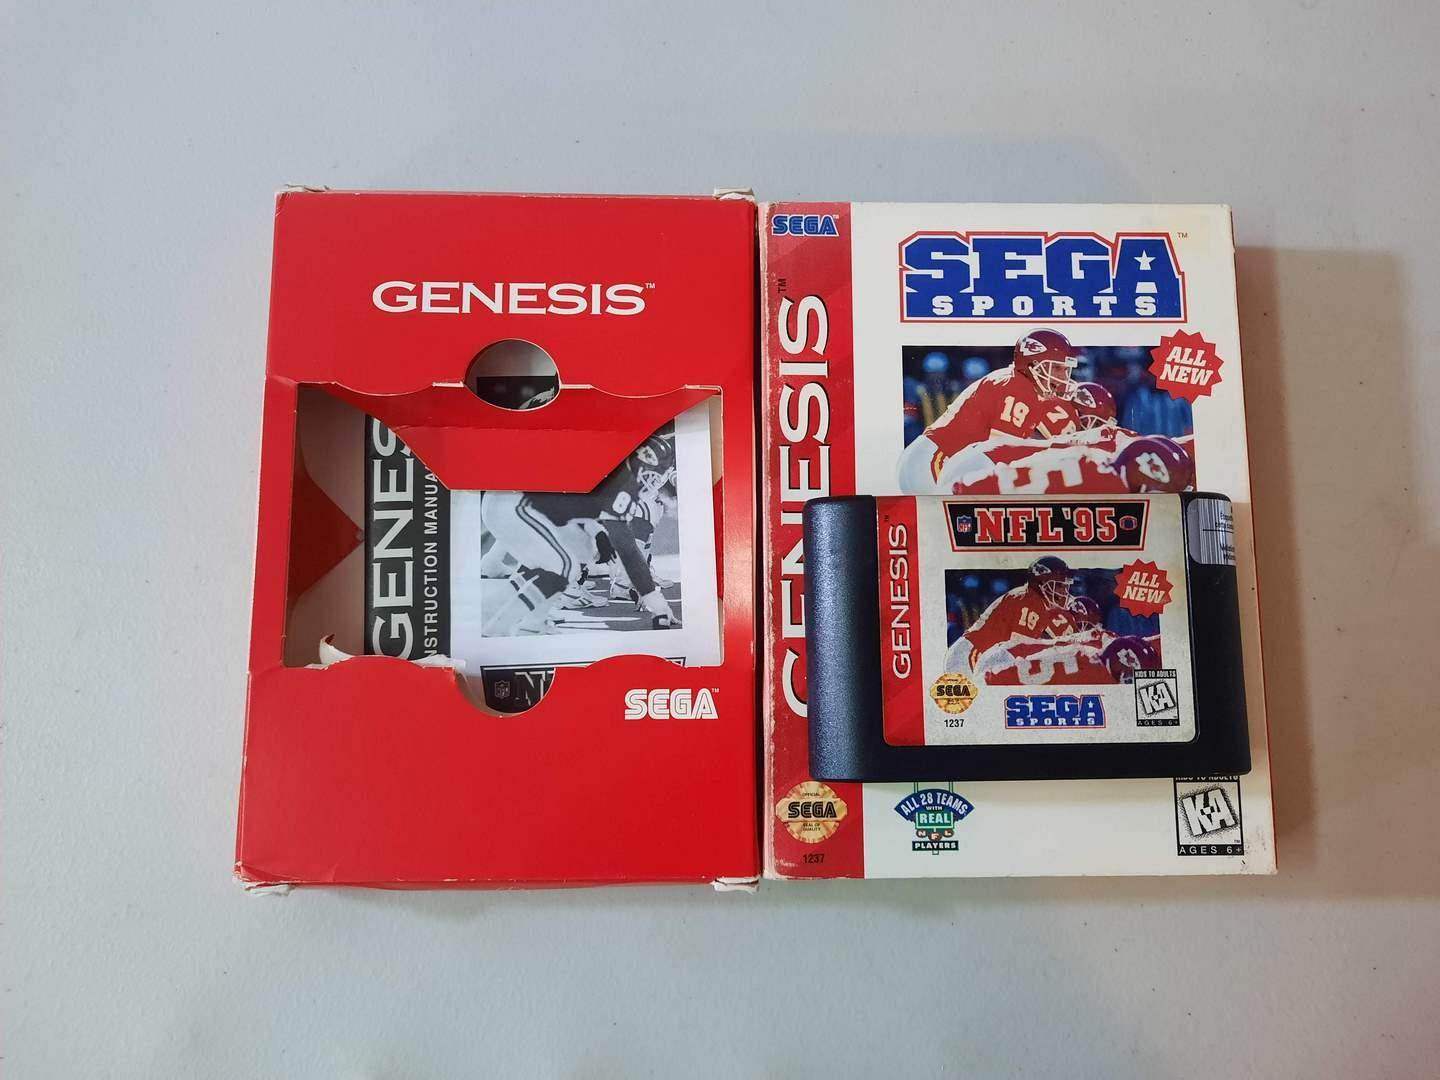 NHL All-Star Hockey 95 Sega Genesis [Cardboard Box] Sega Genesis (Cib) -- Jeux Video Hobby 